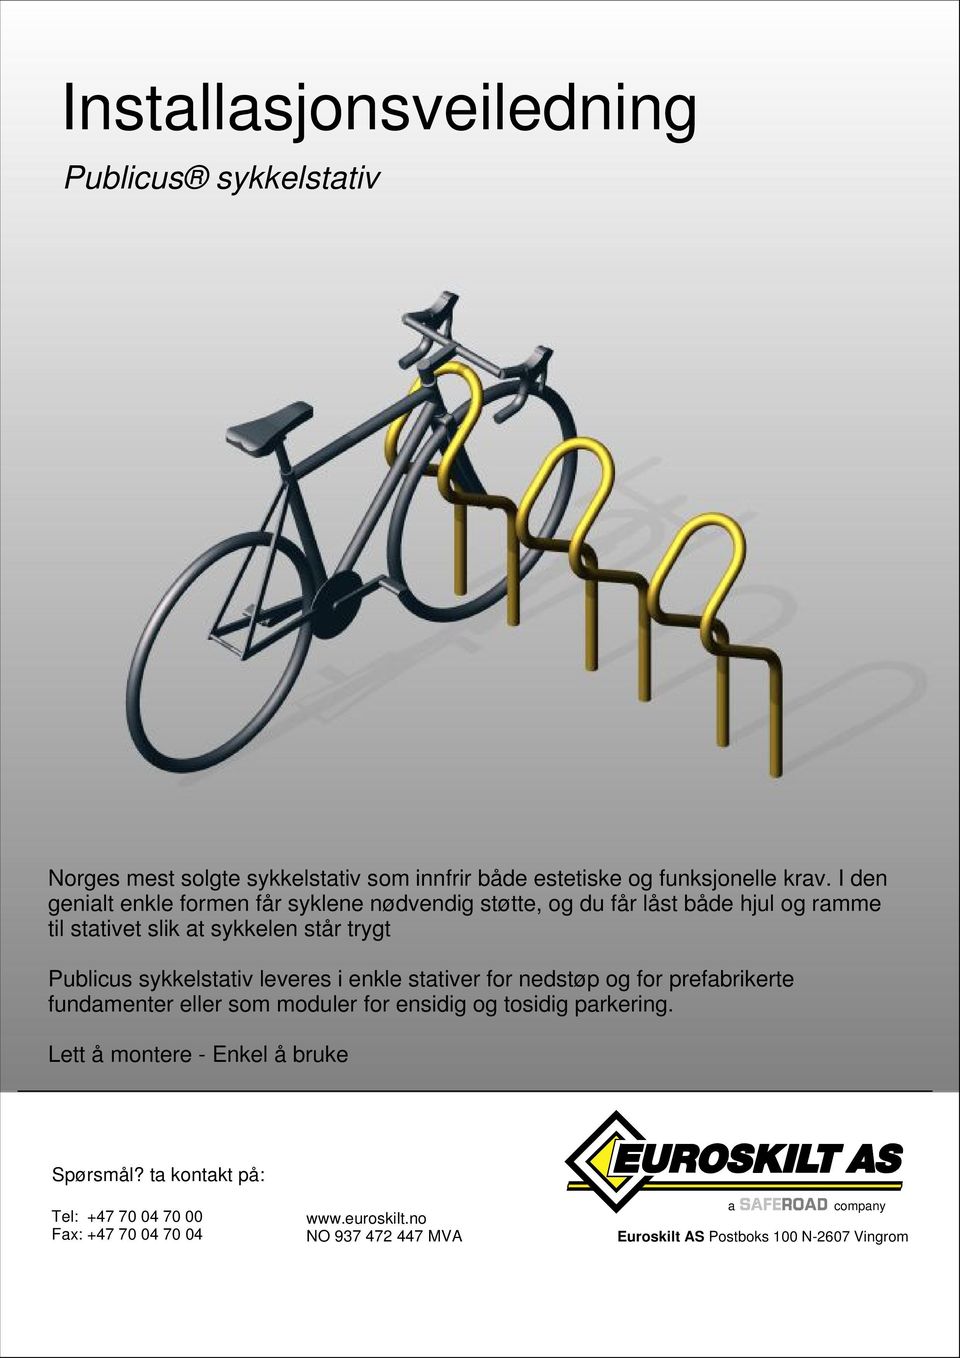 sykkelstativ leveres i enkle stativer for nedstøp og for prefabrikerte fundamenter eller som moduler for ensidig og tosidig parkering.